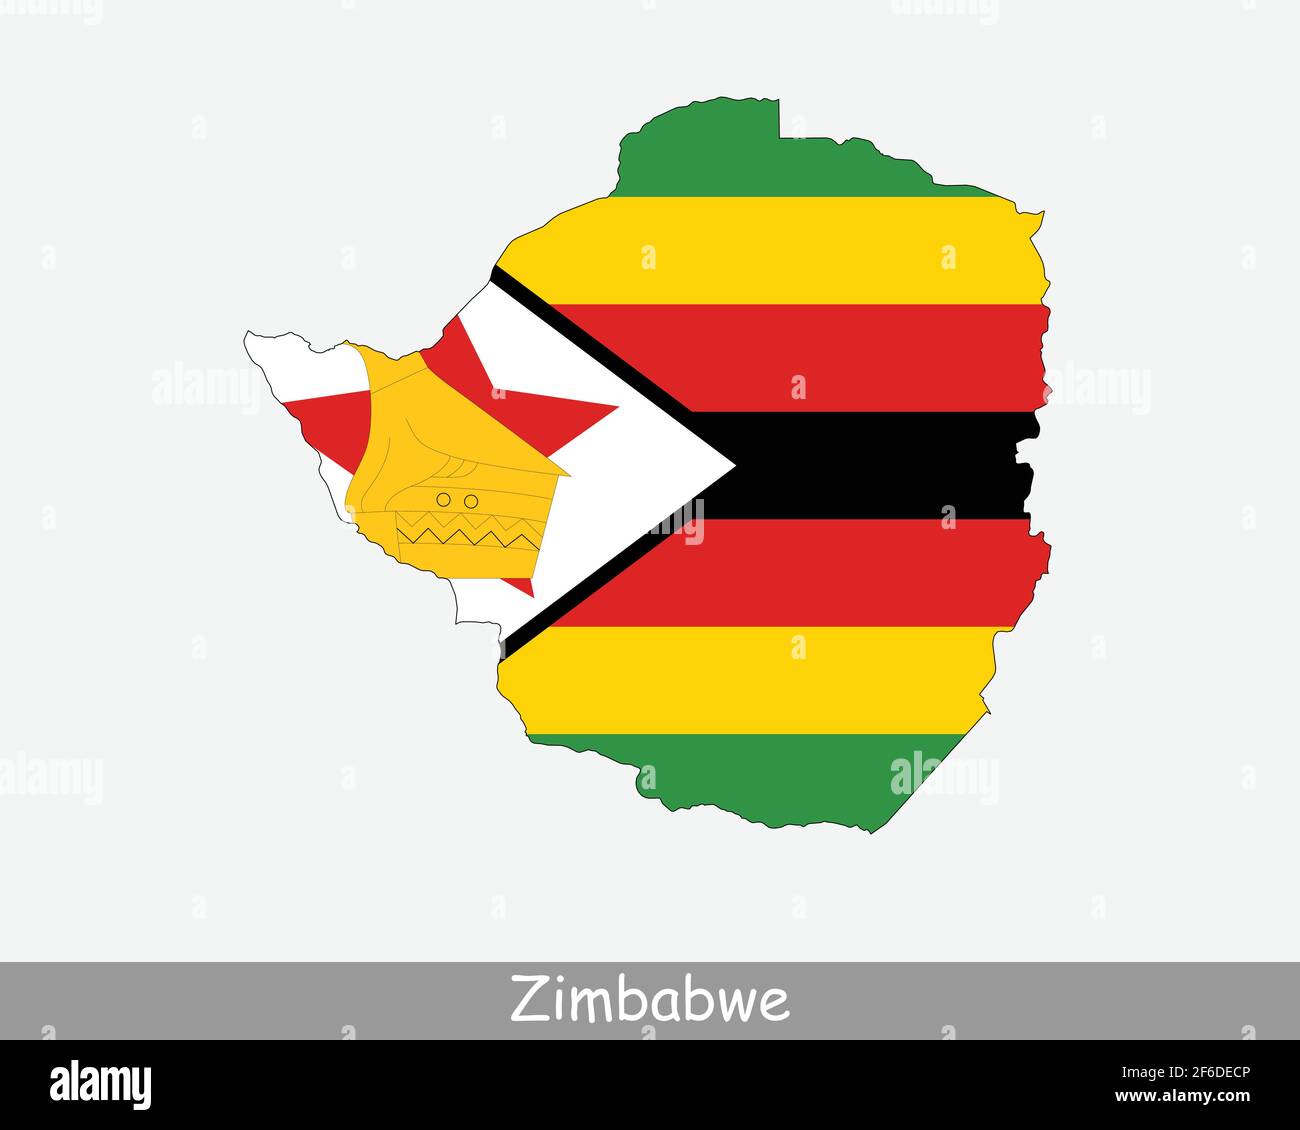 Zimbabwe Flag Map. Map of the Republic of Zimbabwe with the Zimbabwean national flag isolated on a white background. Vector Illustration. Stock Vector